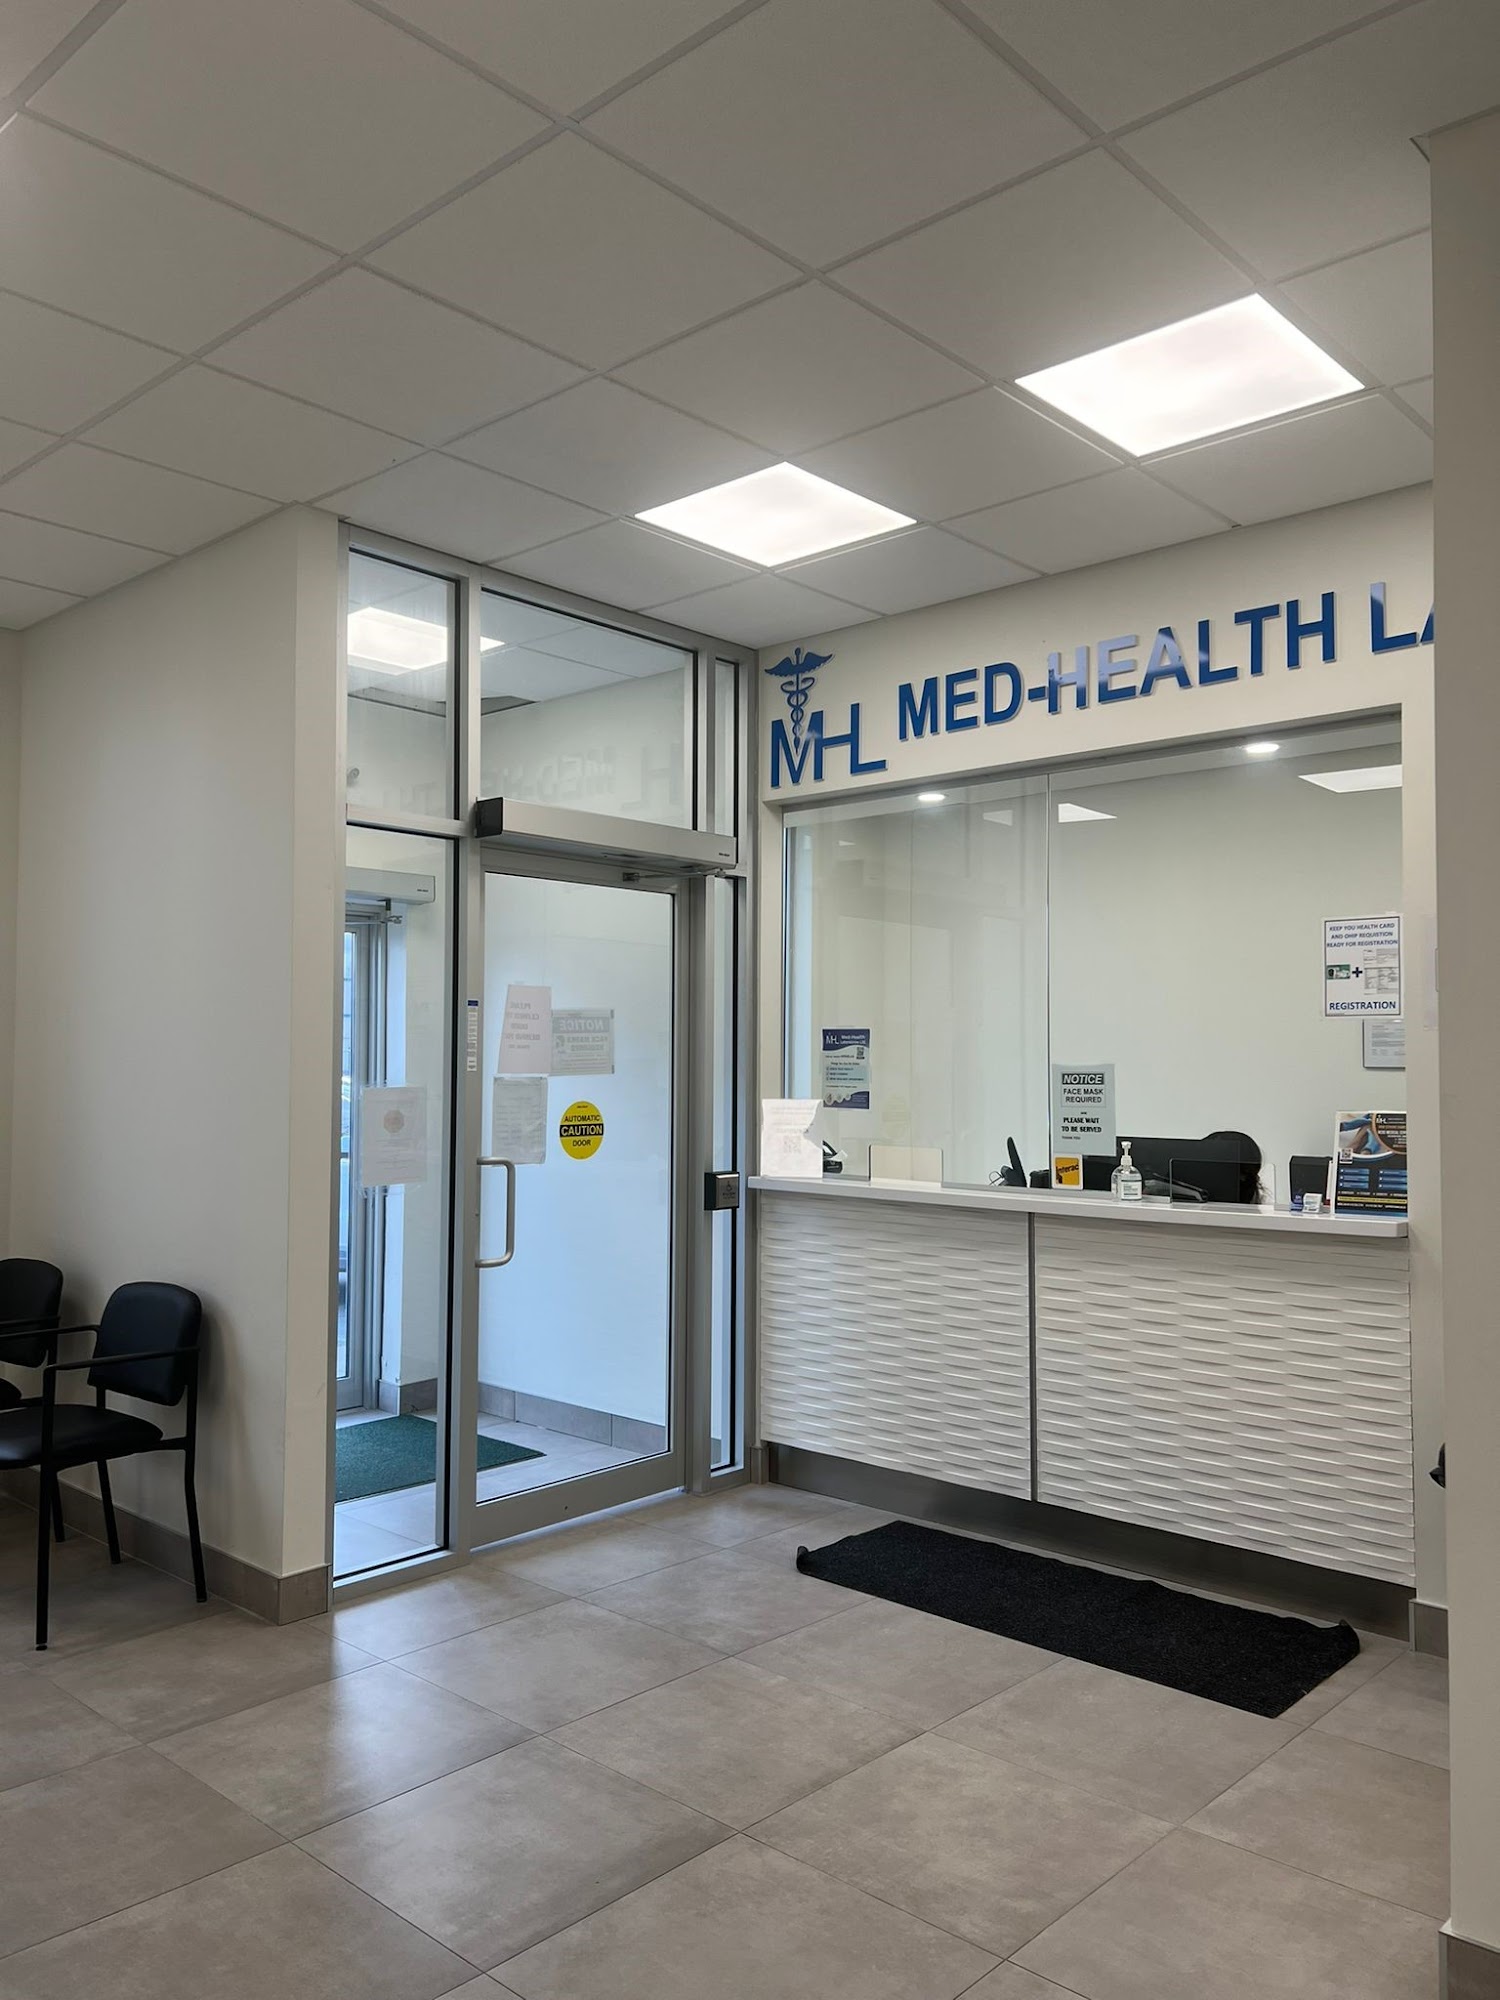 Med-Health Laboratories Ltd.